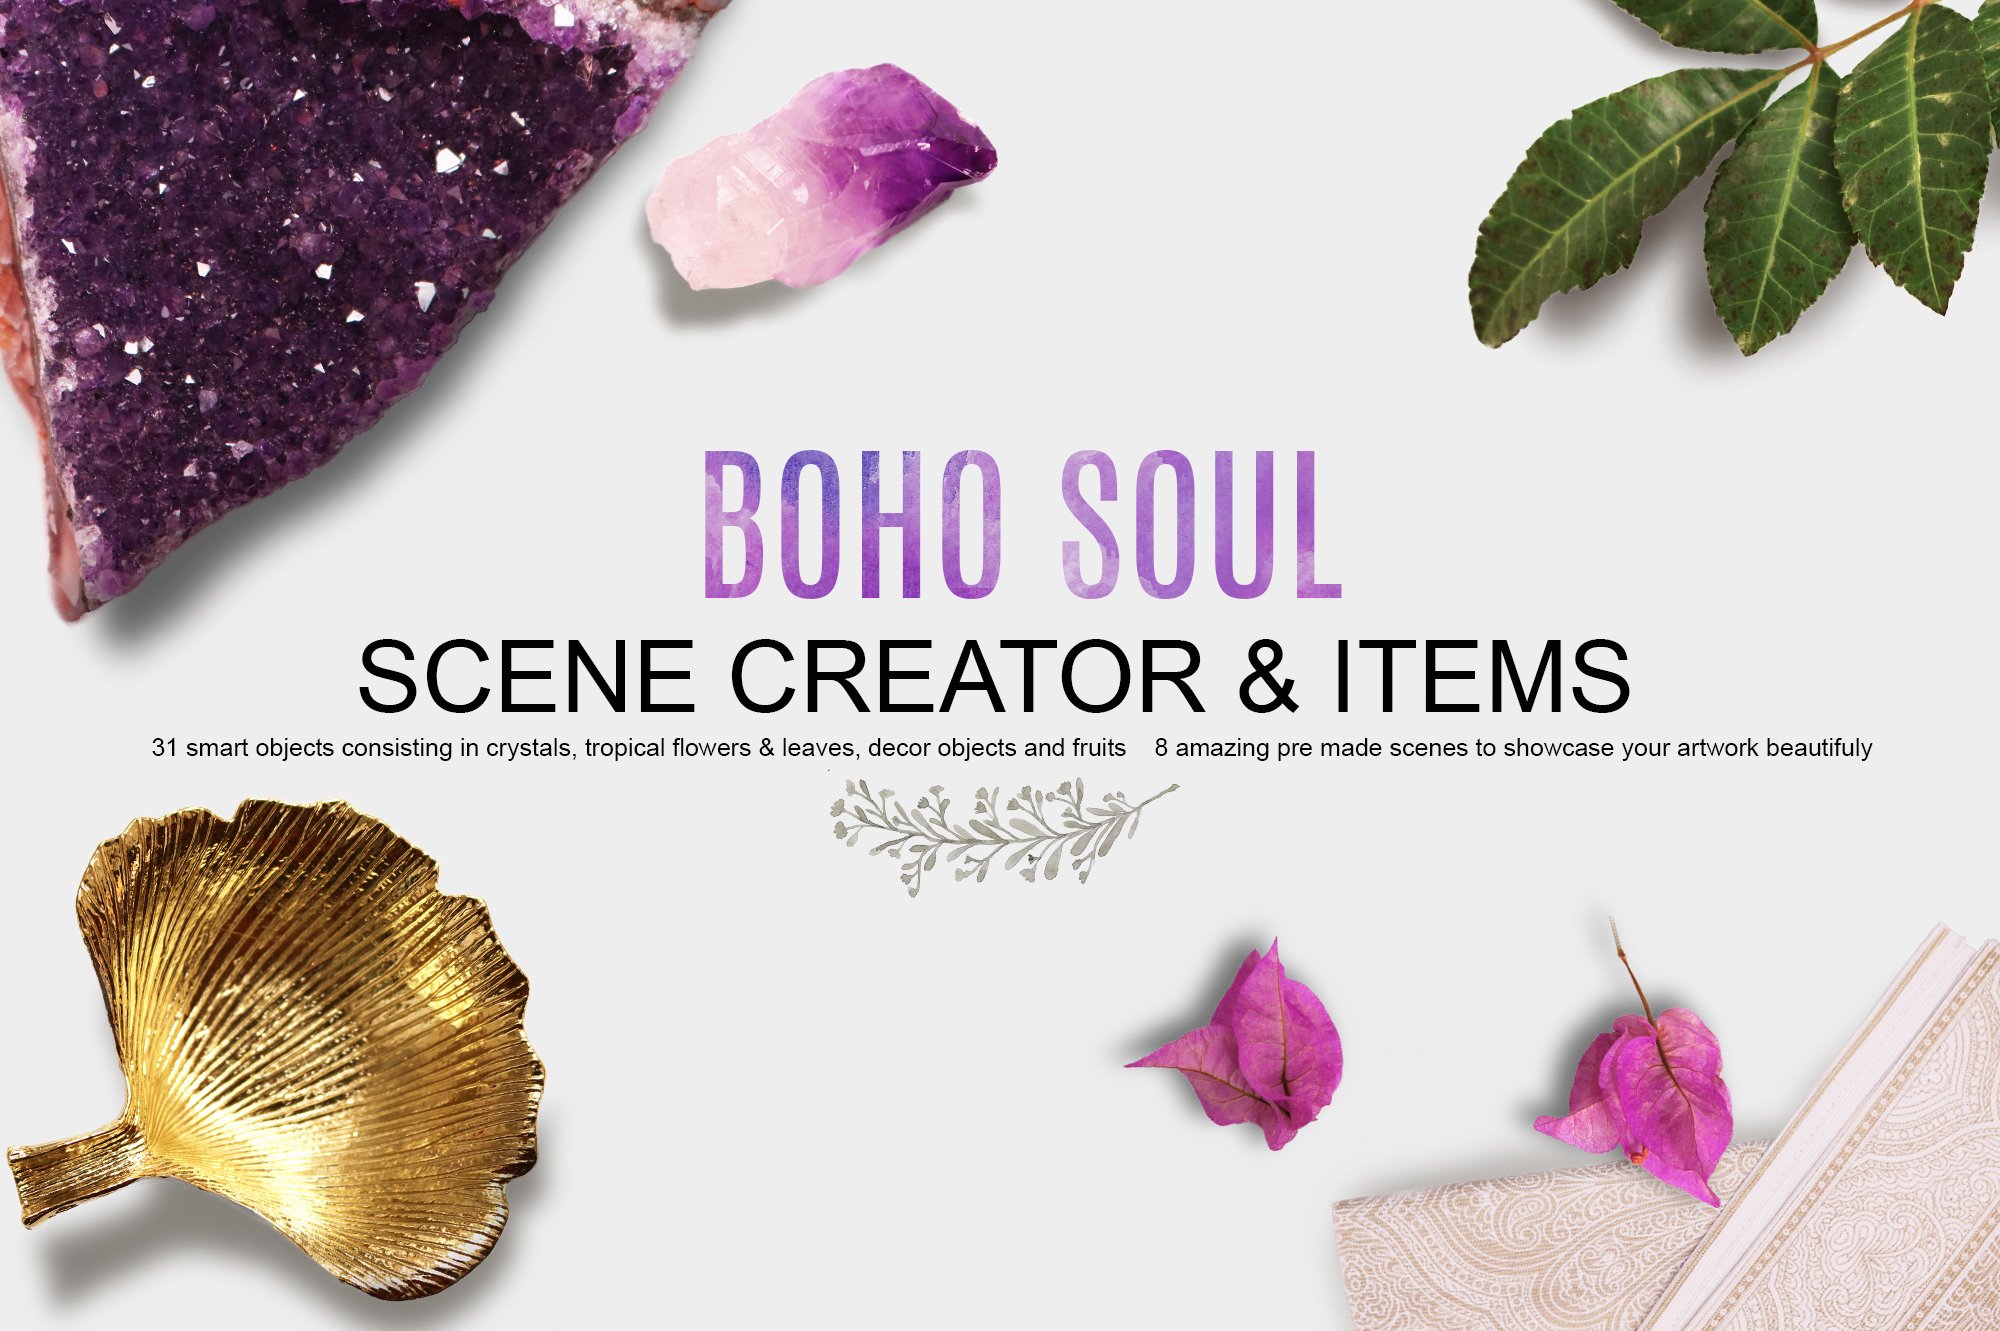 BOHO SOUL scene creator & items cover image.